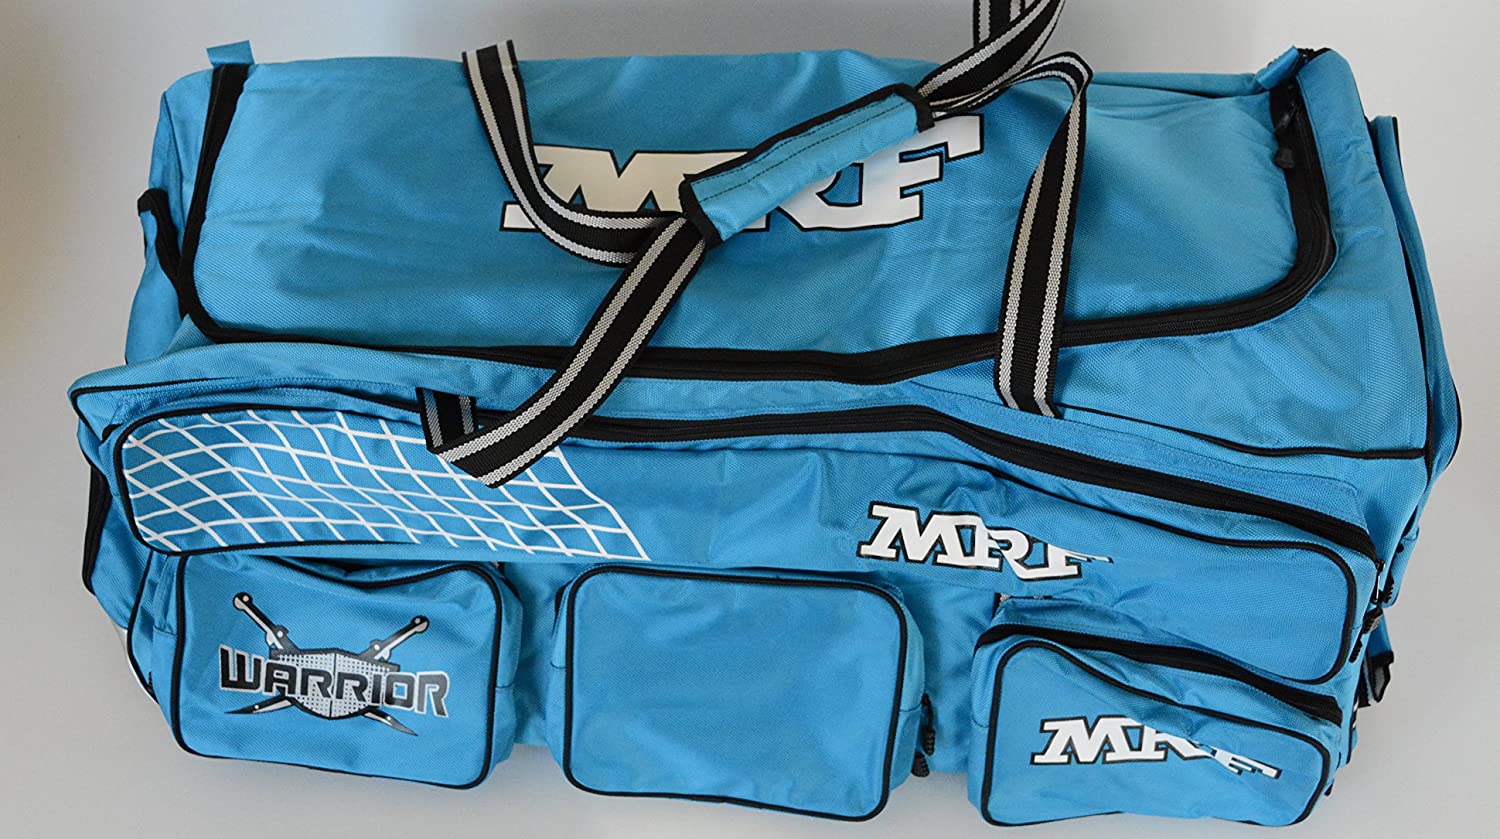 MRF WARRIOR Cricket Kit Bag